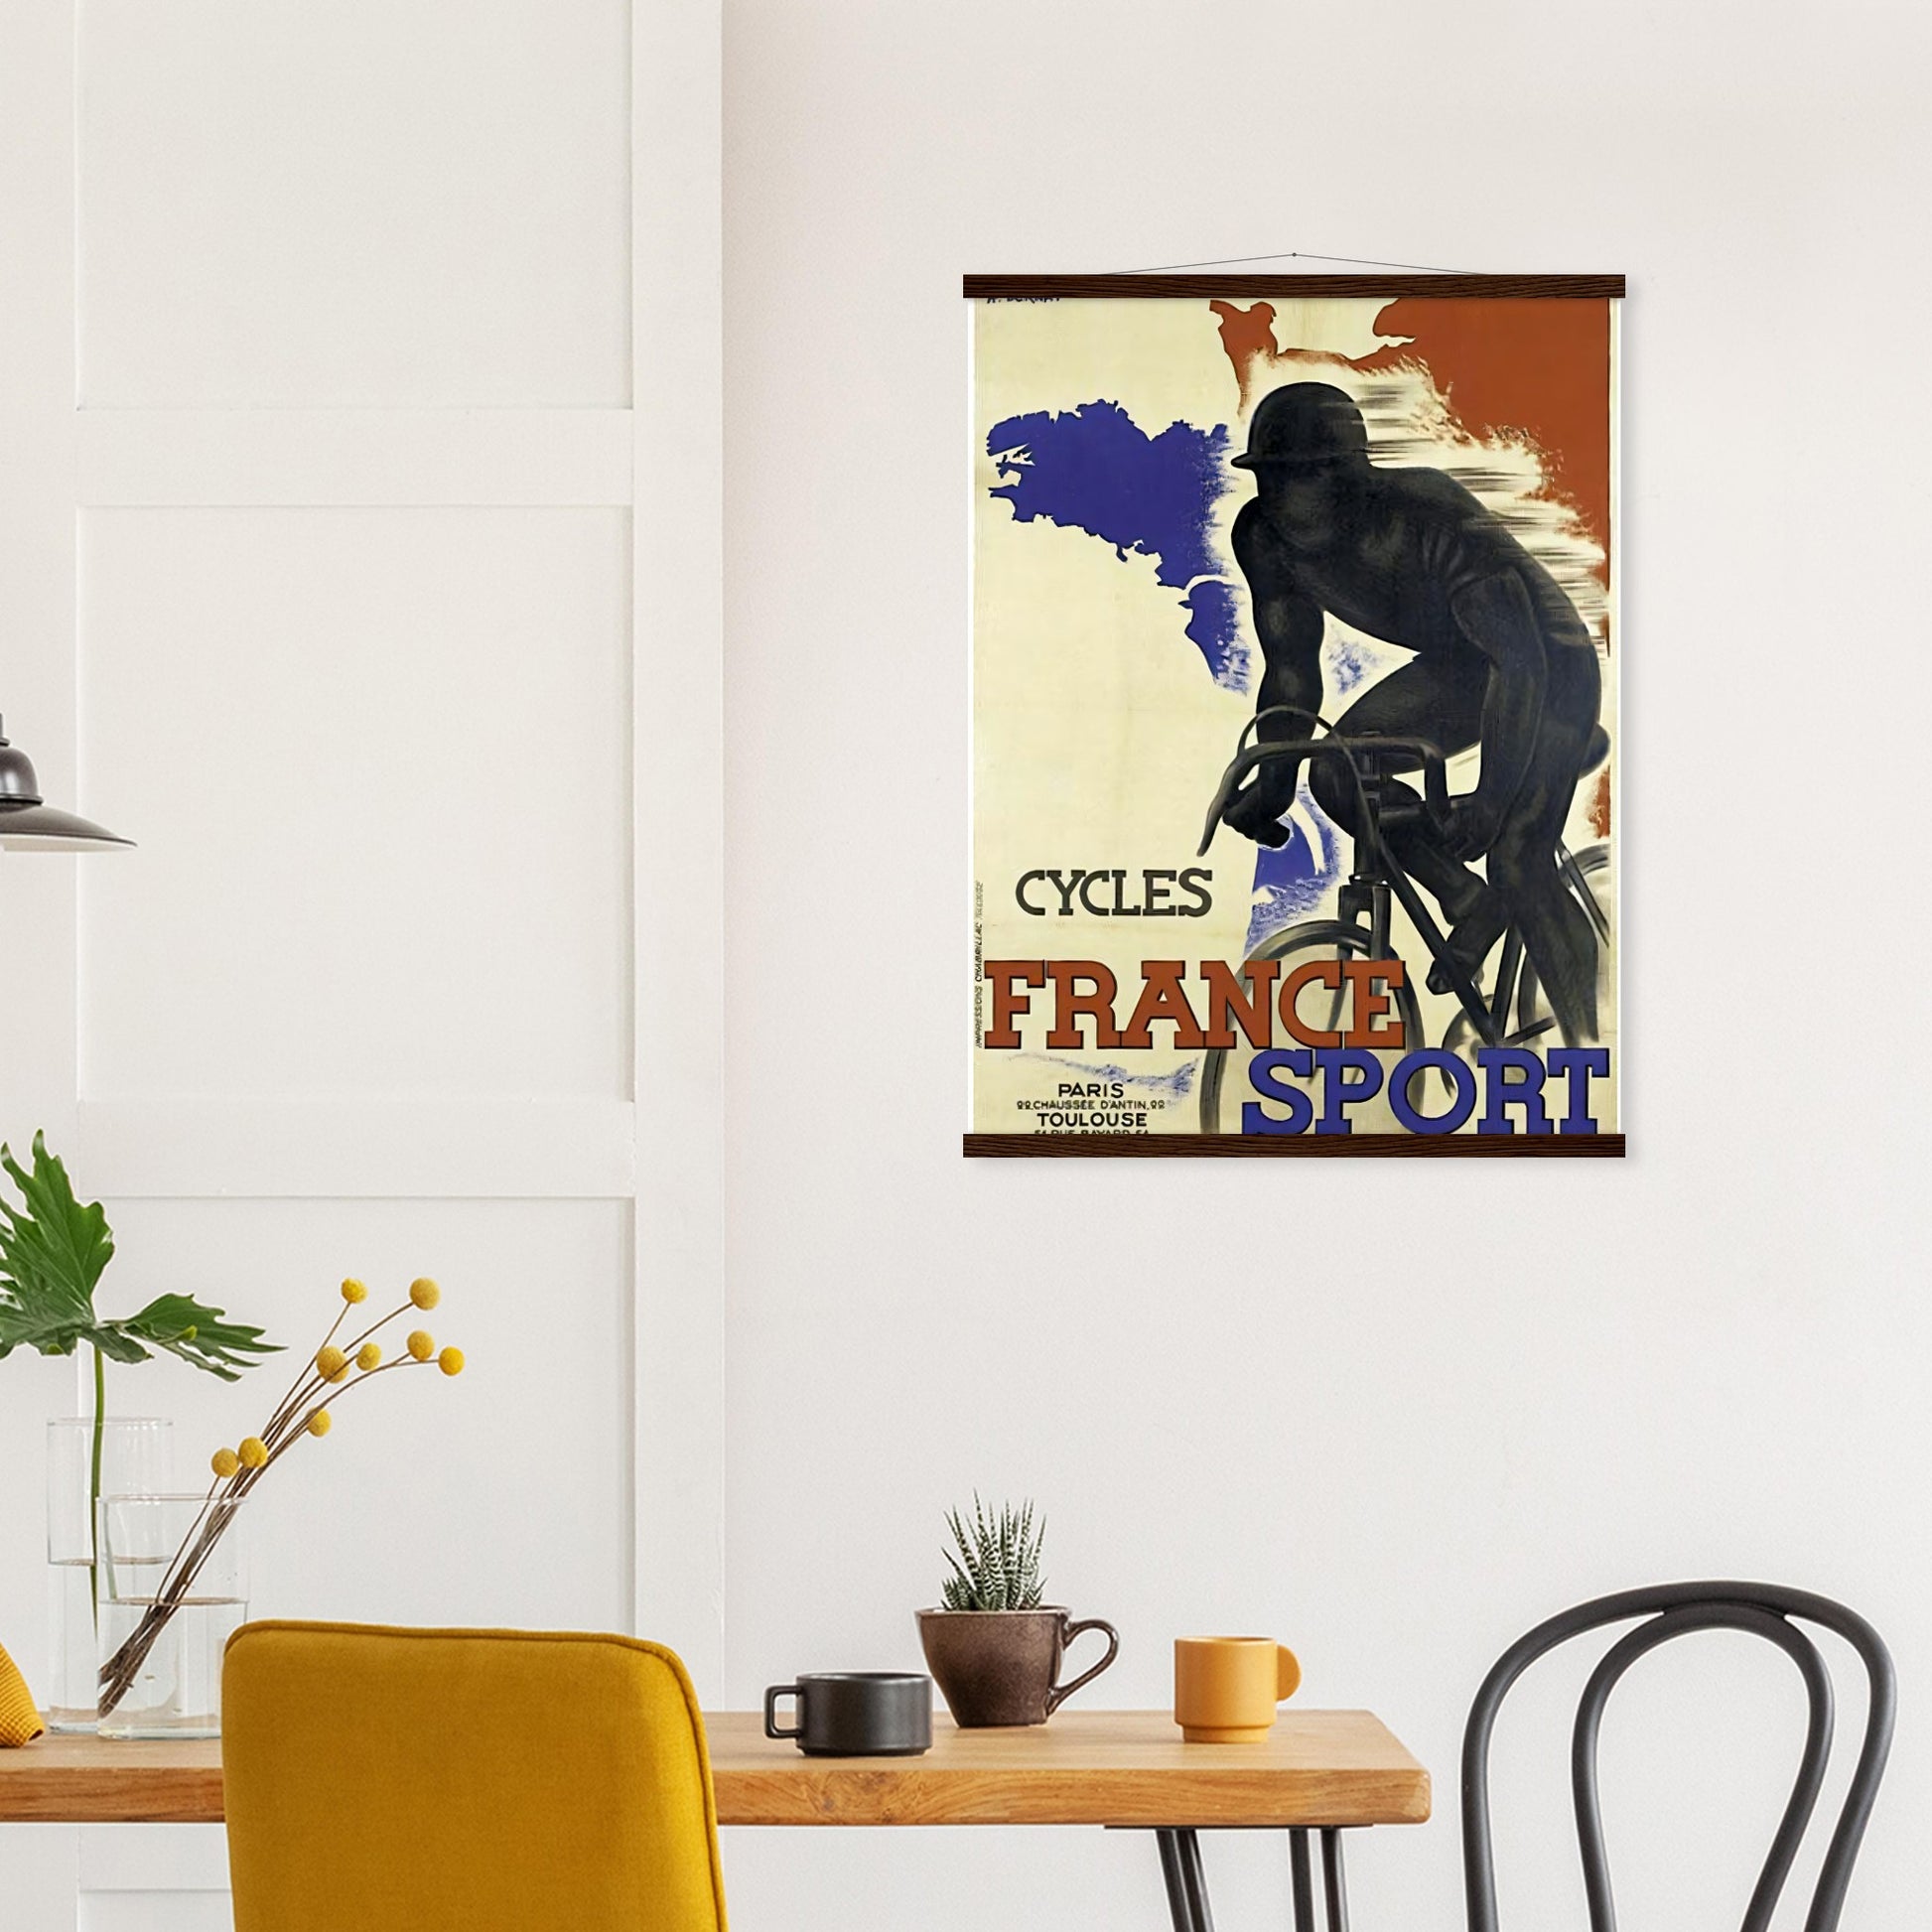 France Sport Vintage Poster Reprint on Premium Matte Paper - Posterify